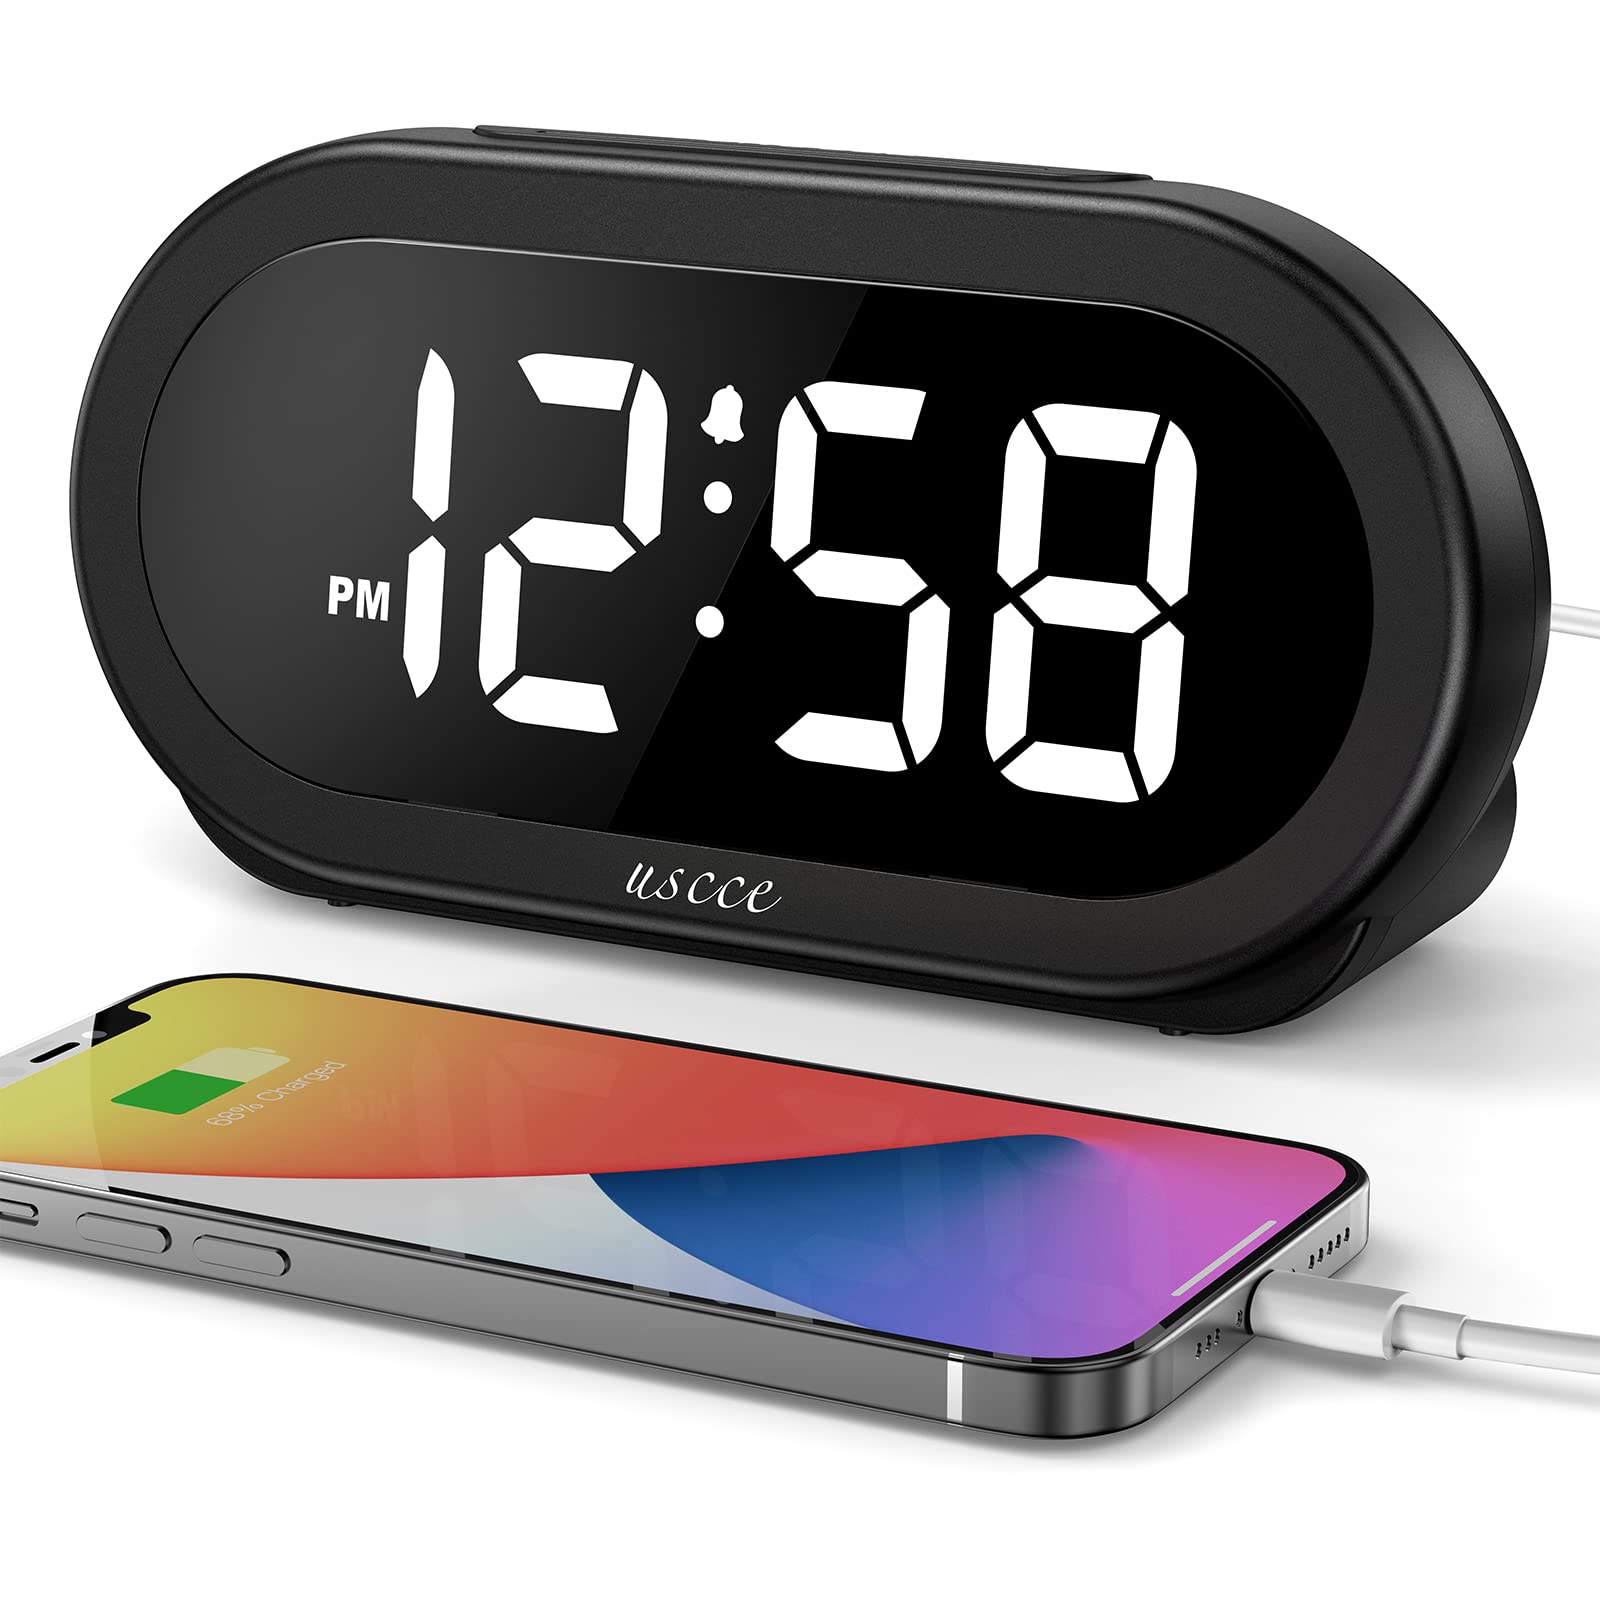 USCCE Small LED Digital Alarm Clock